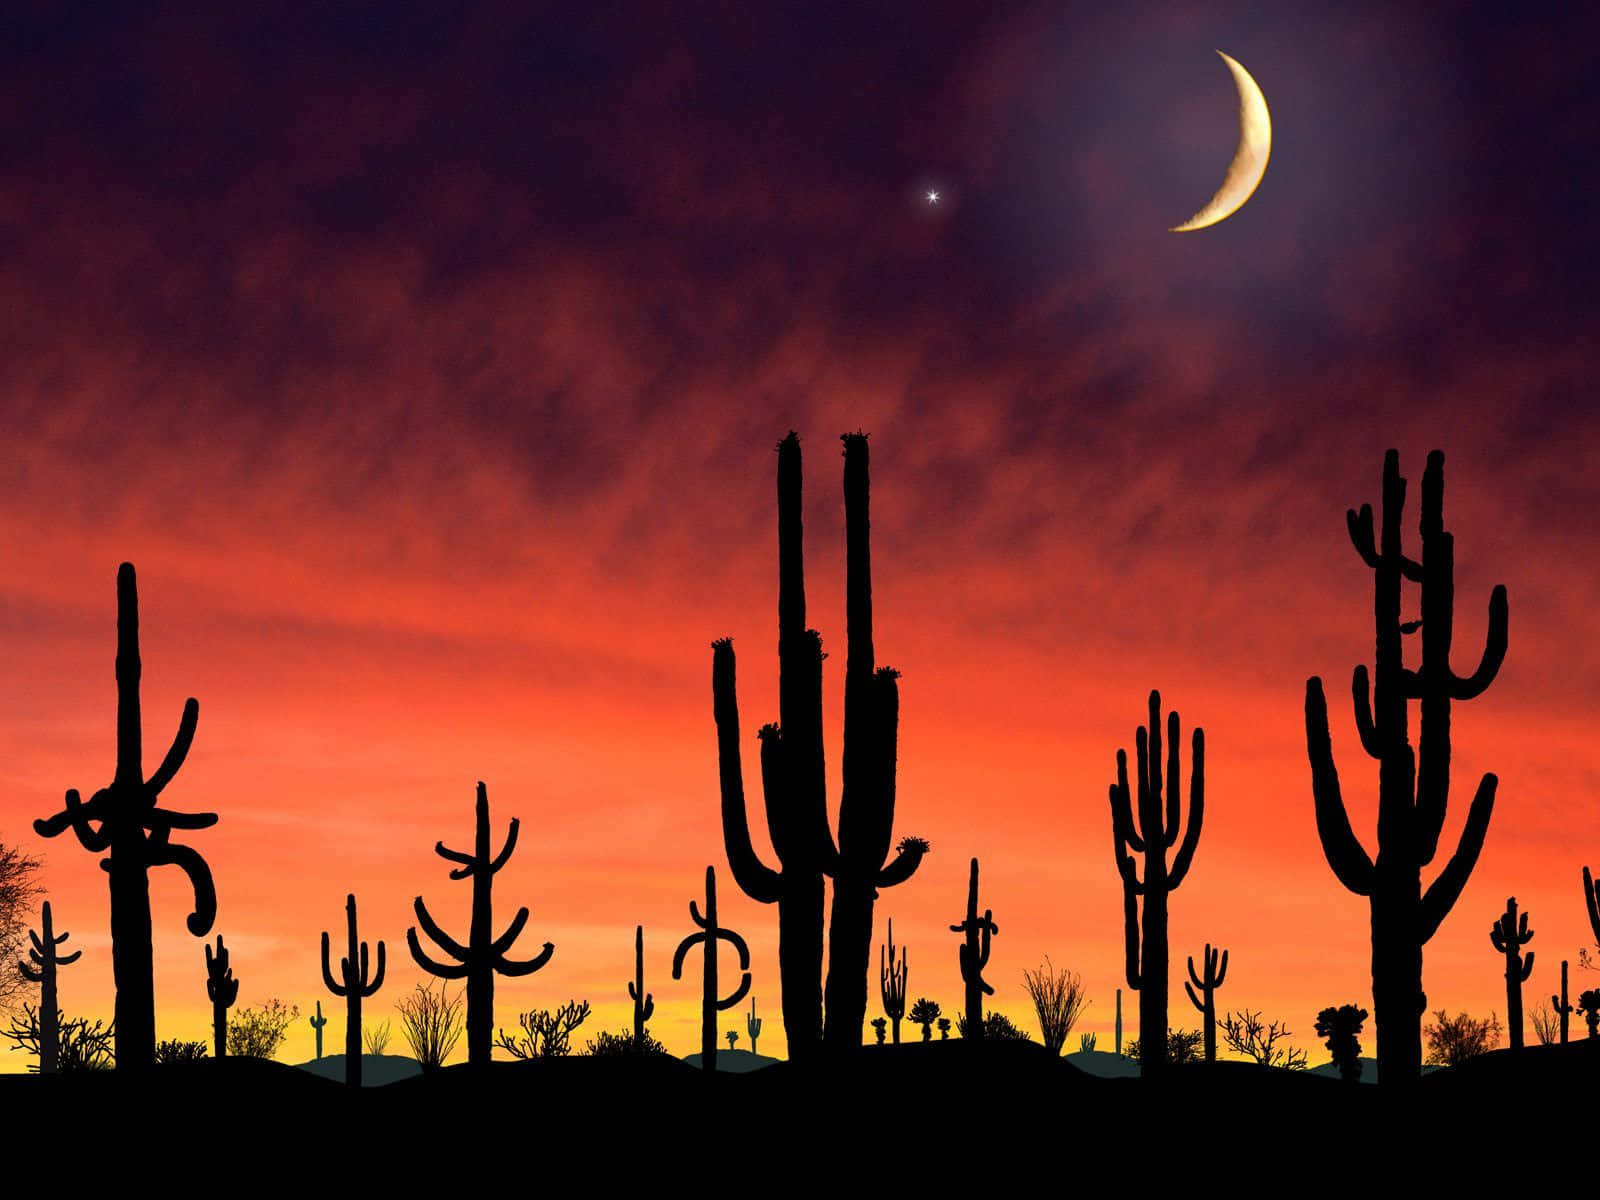 The Arizona Desert Landscape